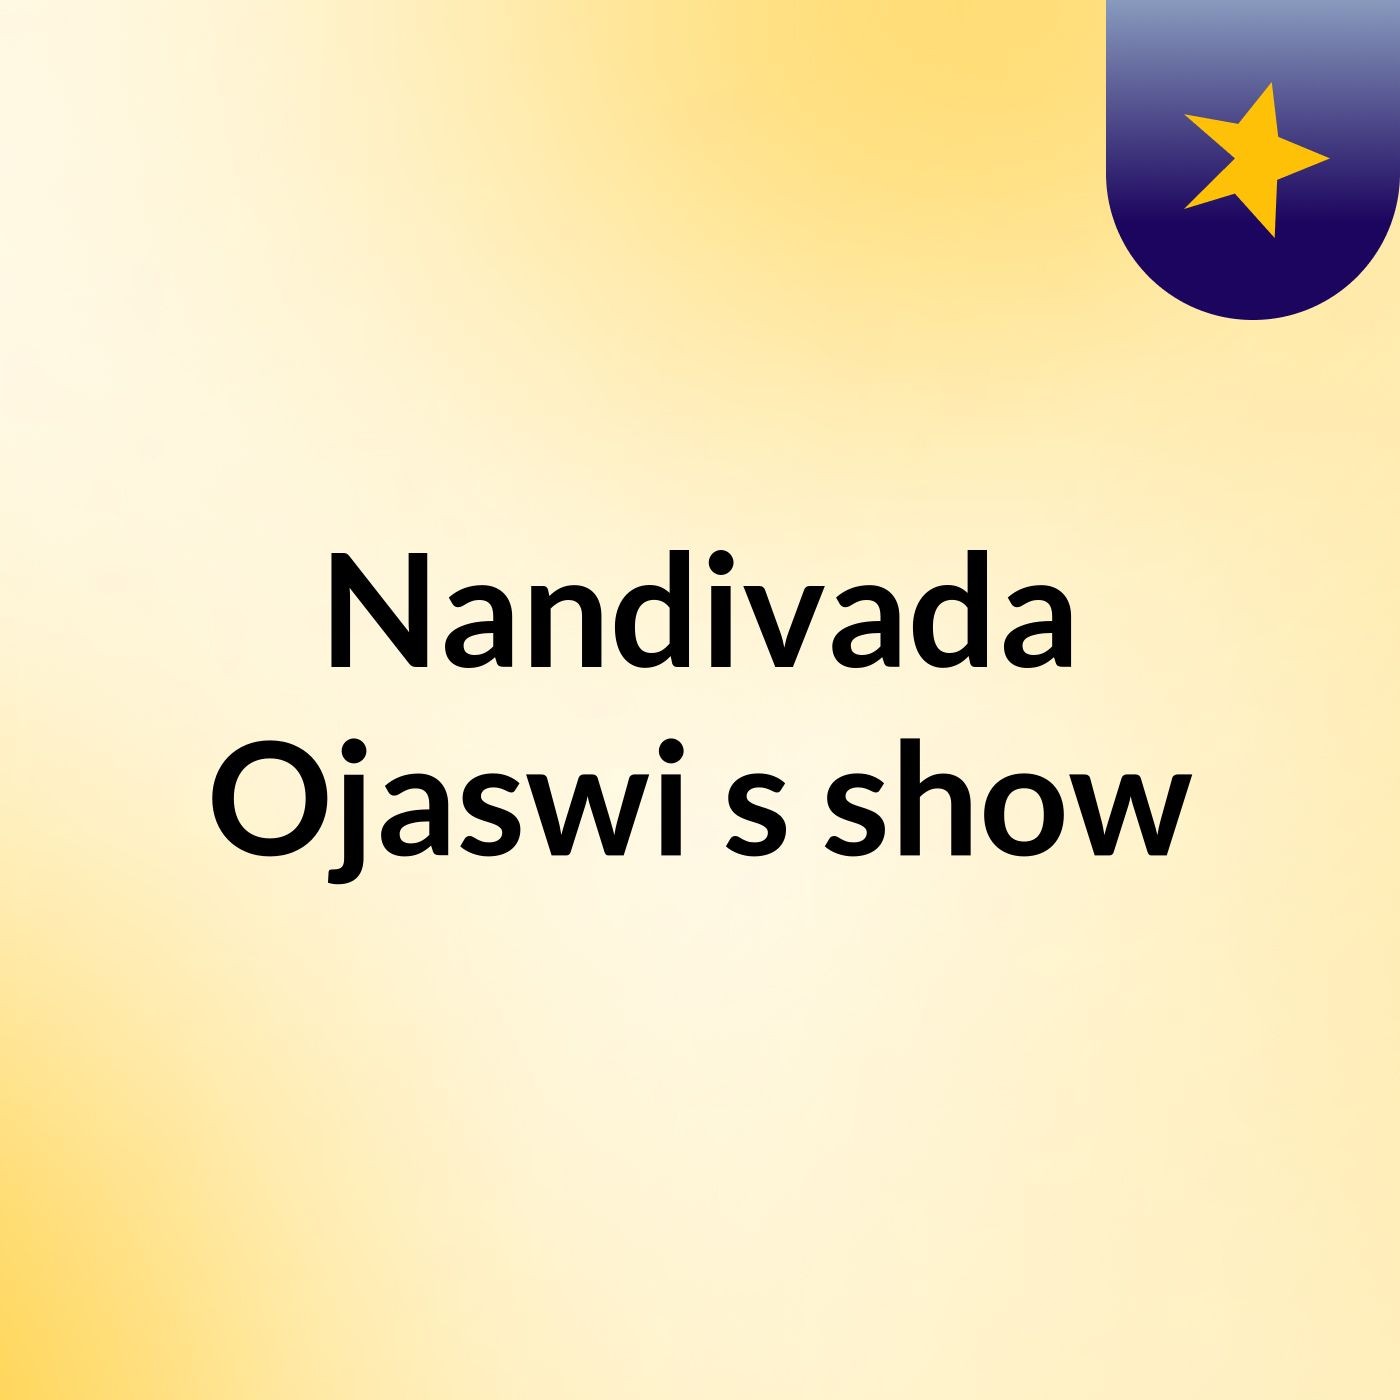 Nandivada Ojaswi's show